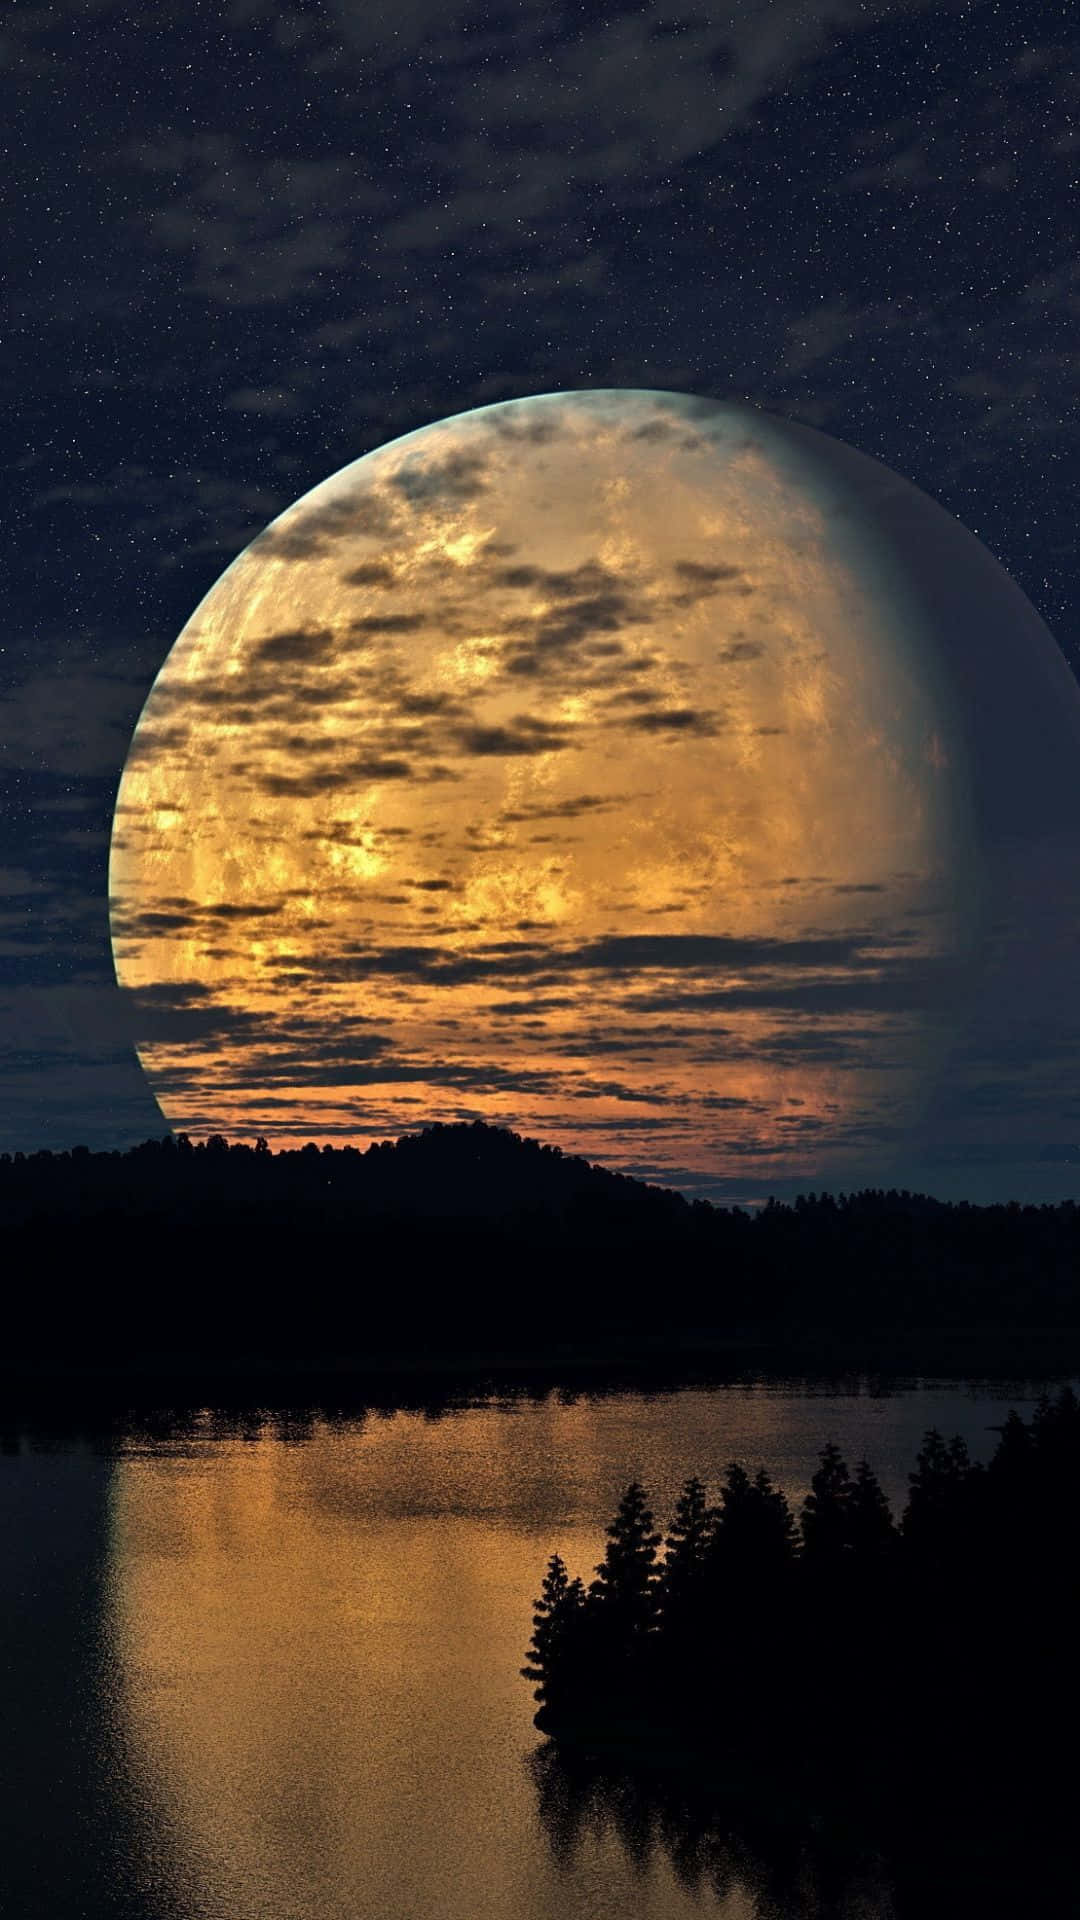 Enfullmåne Syns Över En Sjö På Natten